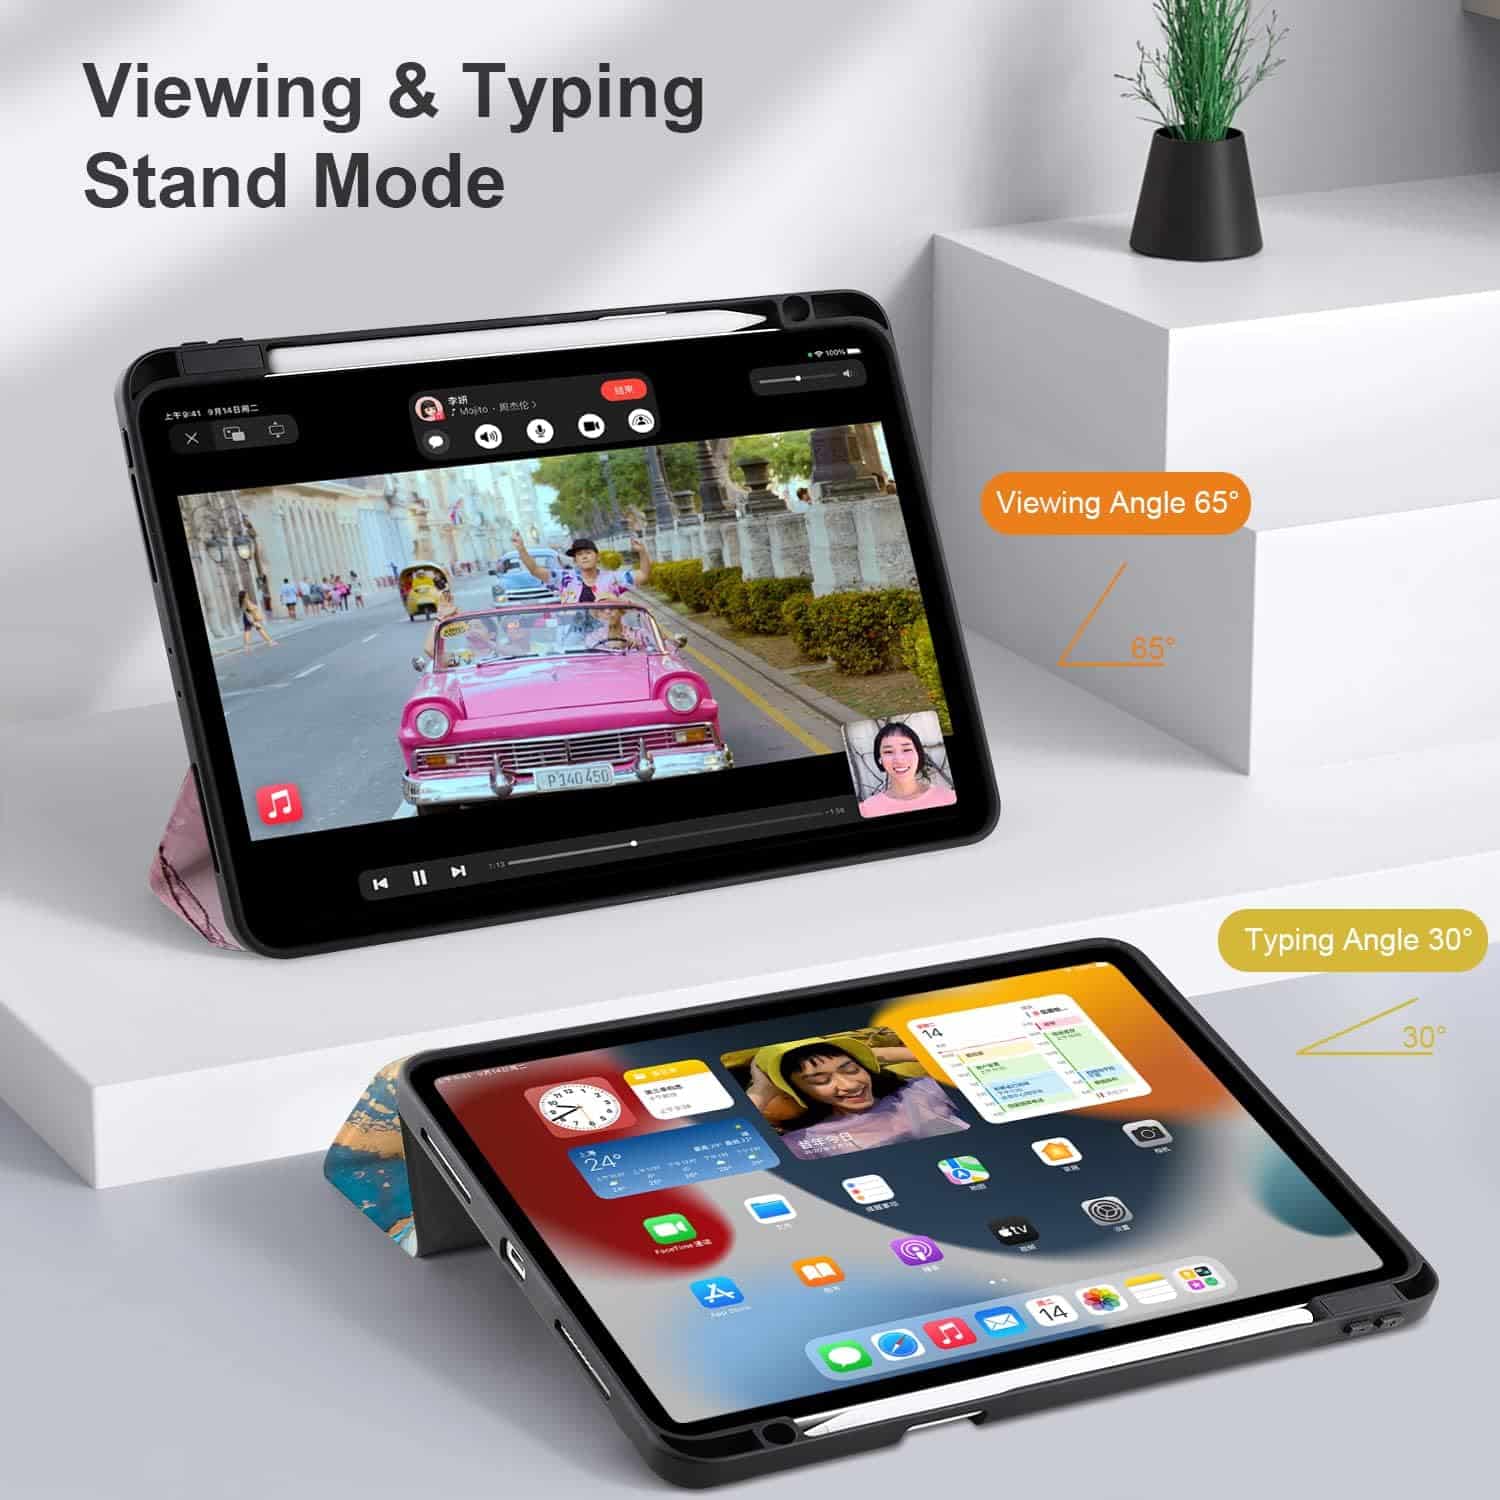 Batianda Case for iPad Air 5th Generation: A Stylish and Protective Companion